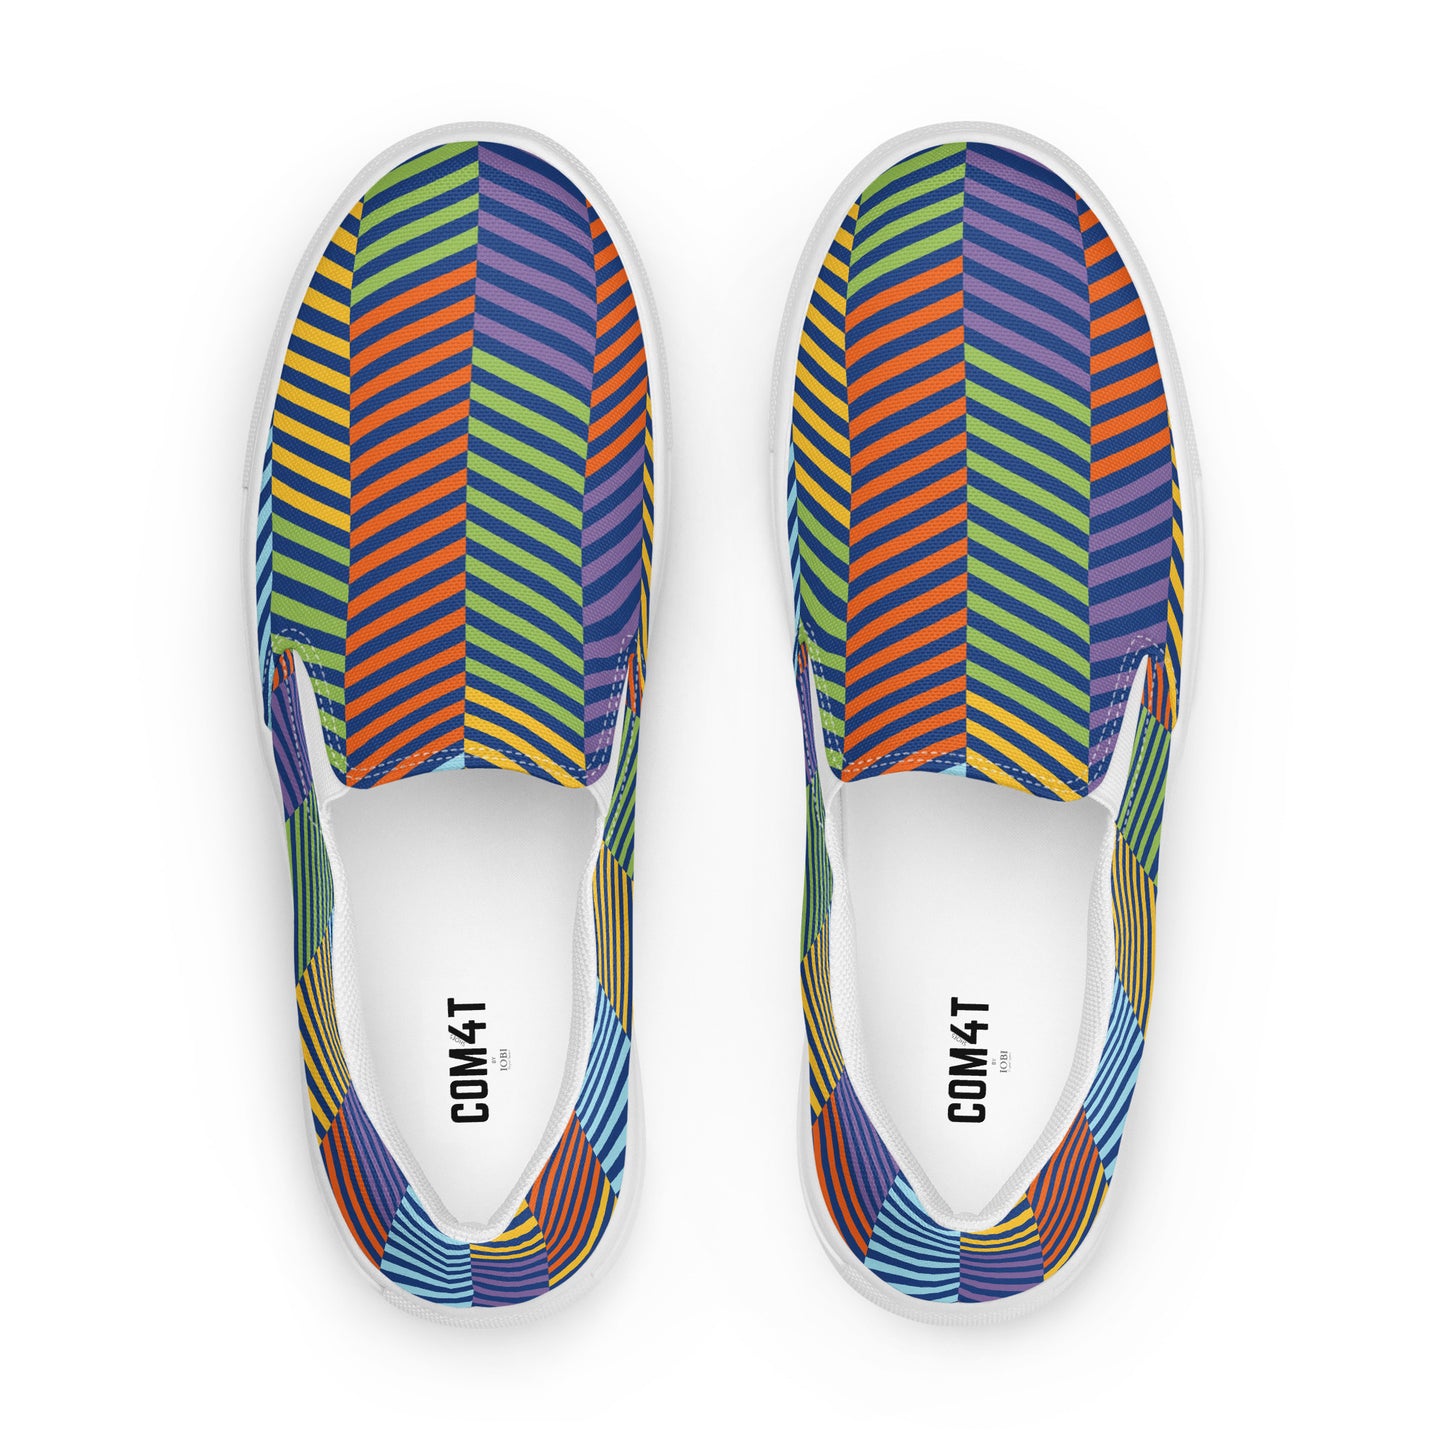 COM4T Color Men’s Slip-On Canvas Fashion Shoes by IOBI Original Apparel